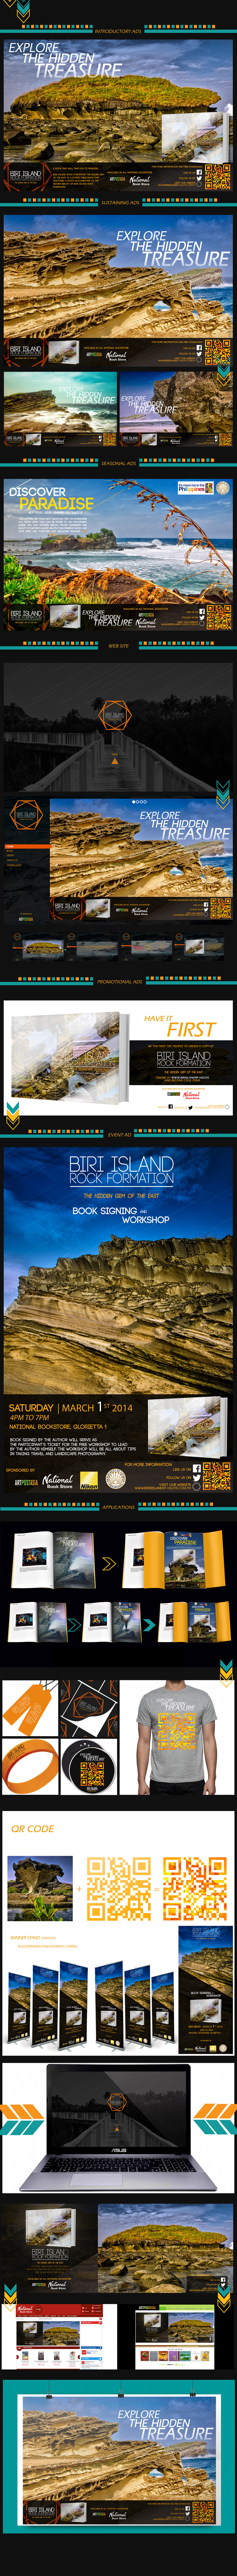 arwin abracia thesis photo documentary feu Biri island Island philippines Samar asia treasure gem rock formation rock formation